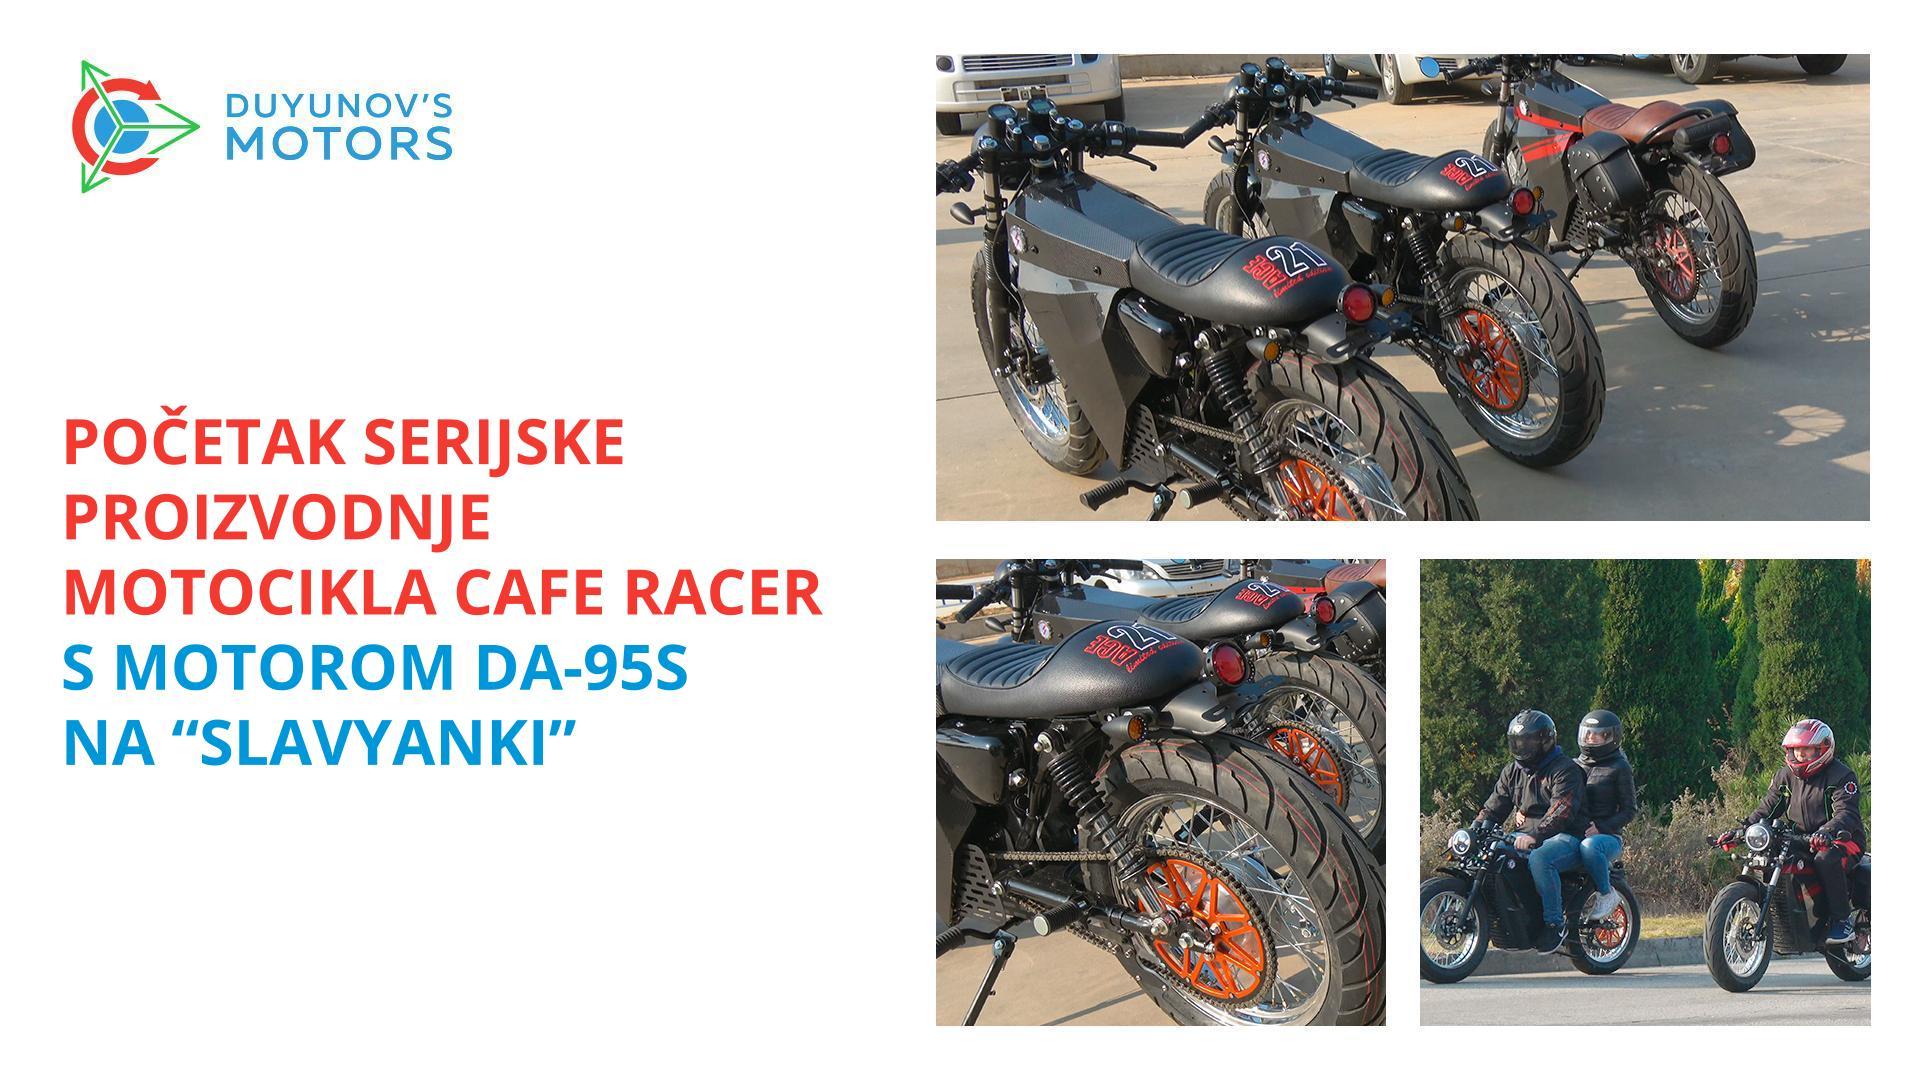 Početak serijske proizvodnje motocikla Cafe racer s motorom DA-95S na "Slavyanki"